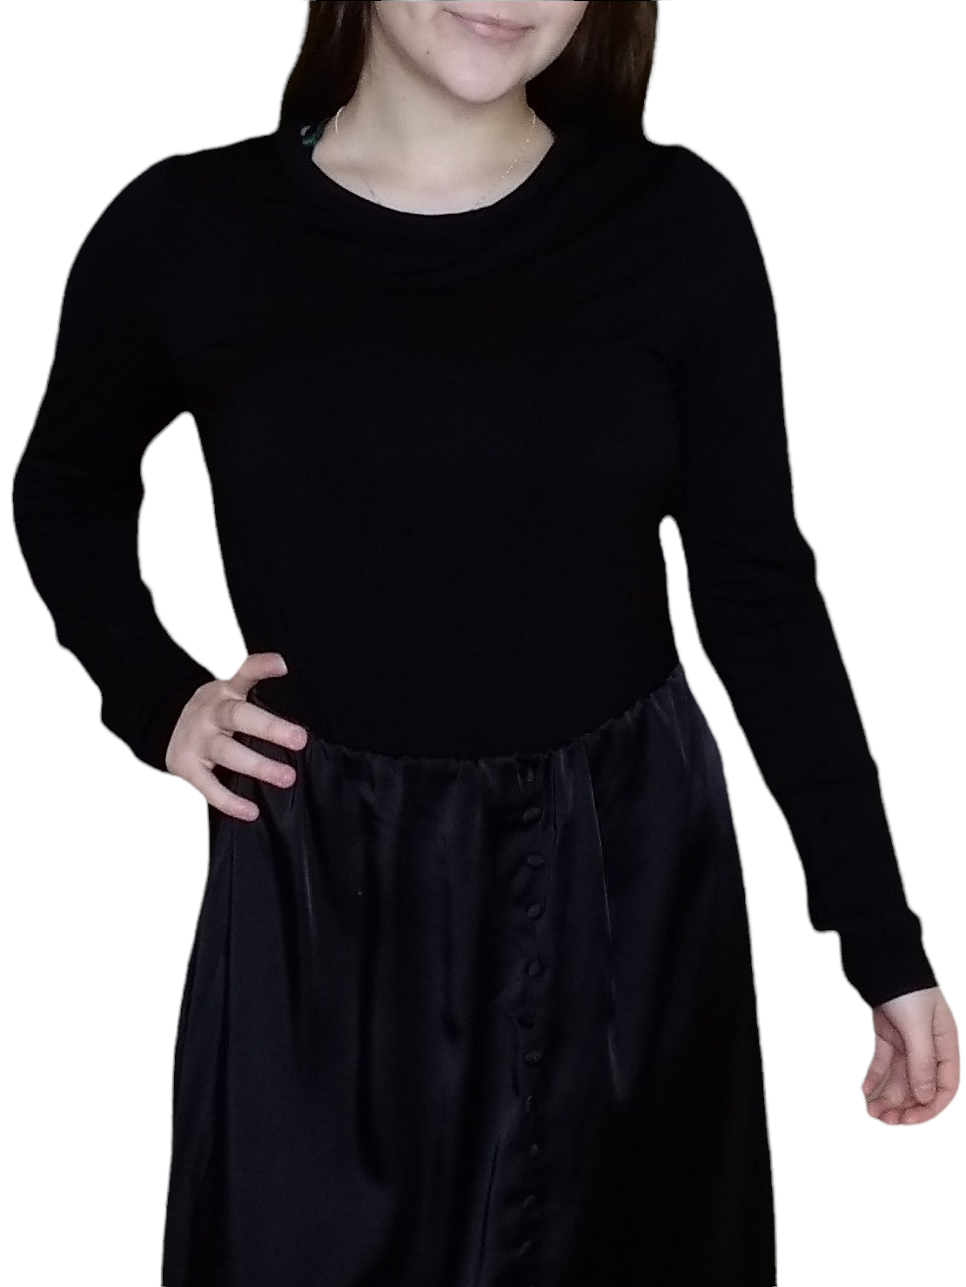 Black Long Sleeve Stretchy Bodysuit